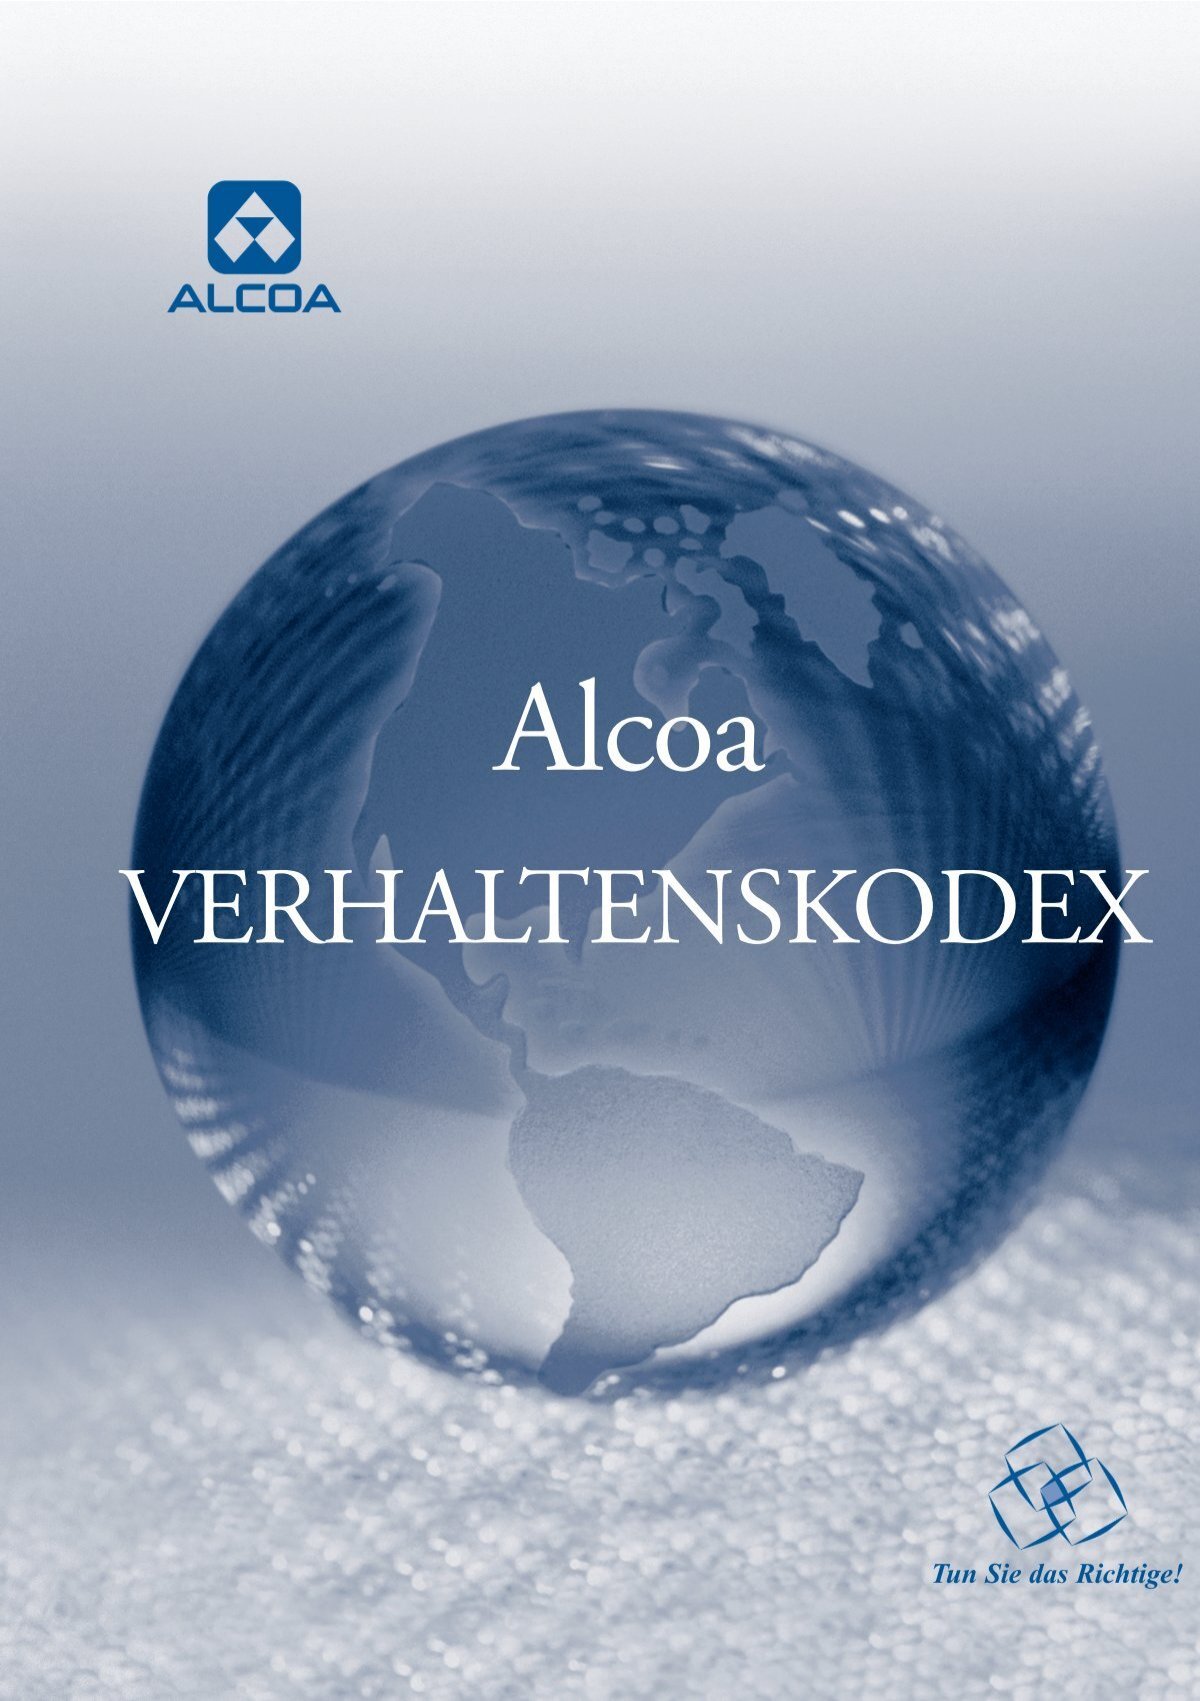 Verhaltenskodex Alcoa